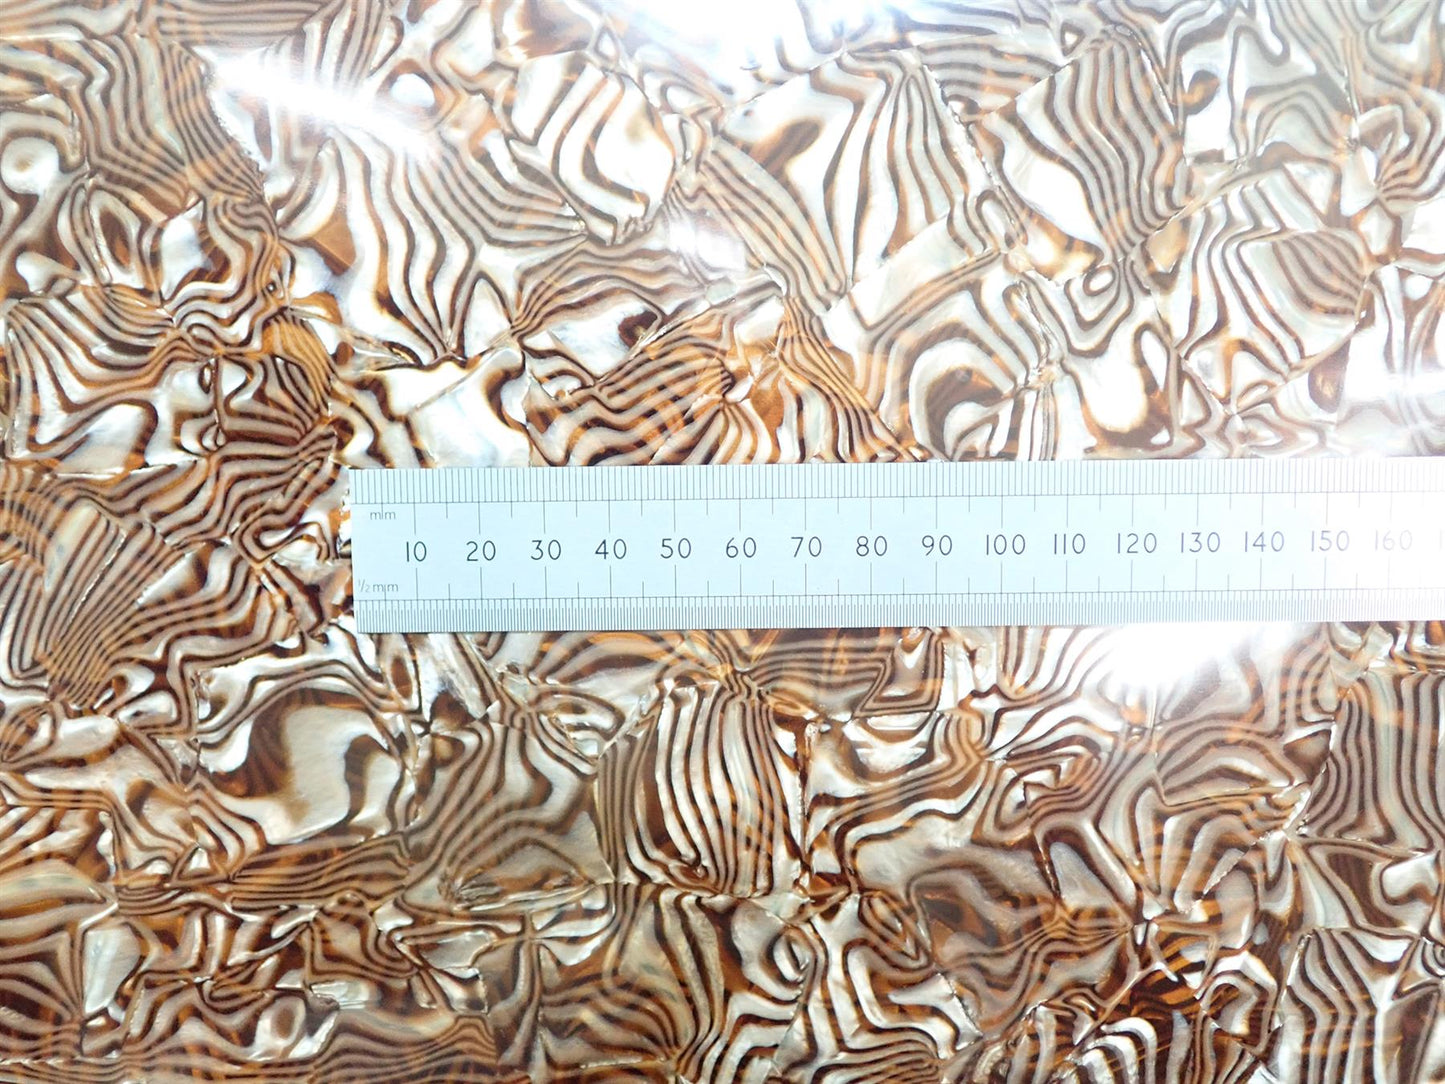 Incudo Brown Tiger Shell Celluloid Veneer / Wrap - 1600x700x0.17mm (63x27.56x0.007")